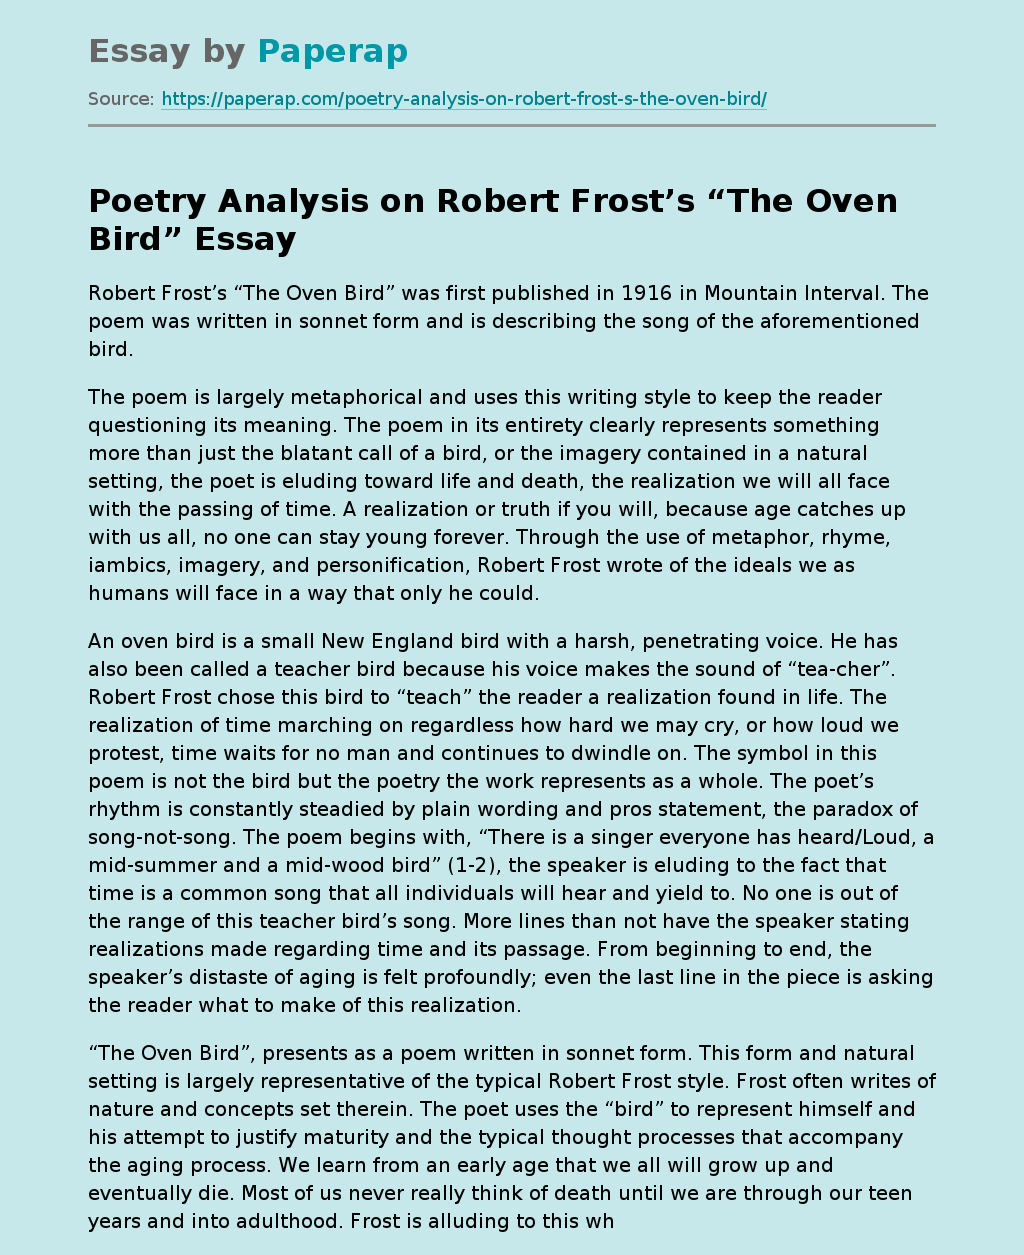 Poetry Analysis on Robert Frost’s “The Oven Bird”